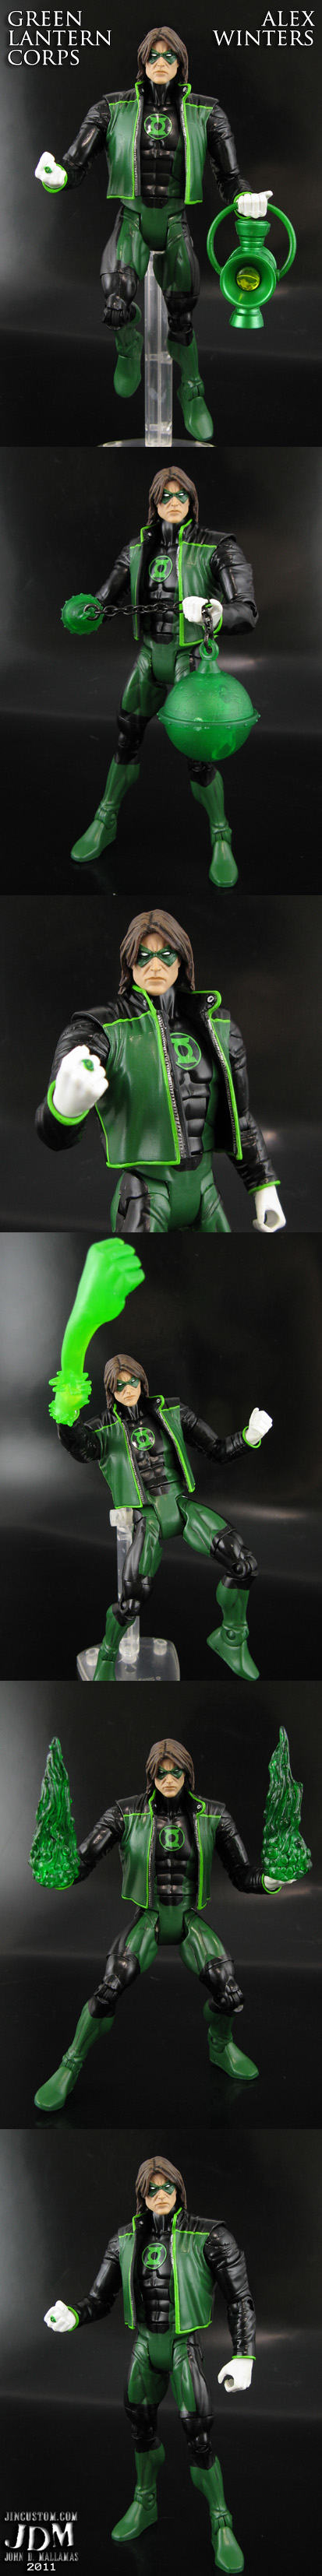 Custom Green Lantern